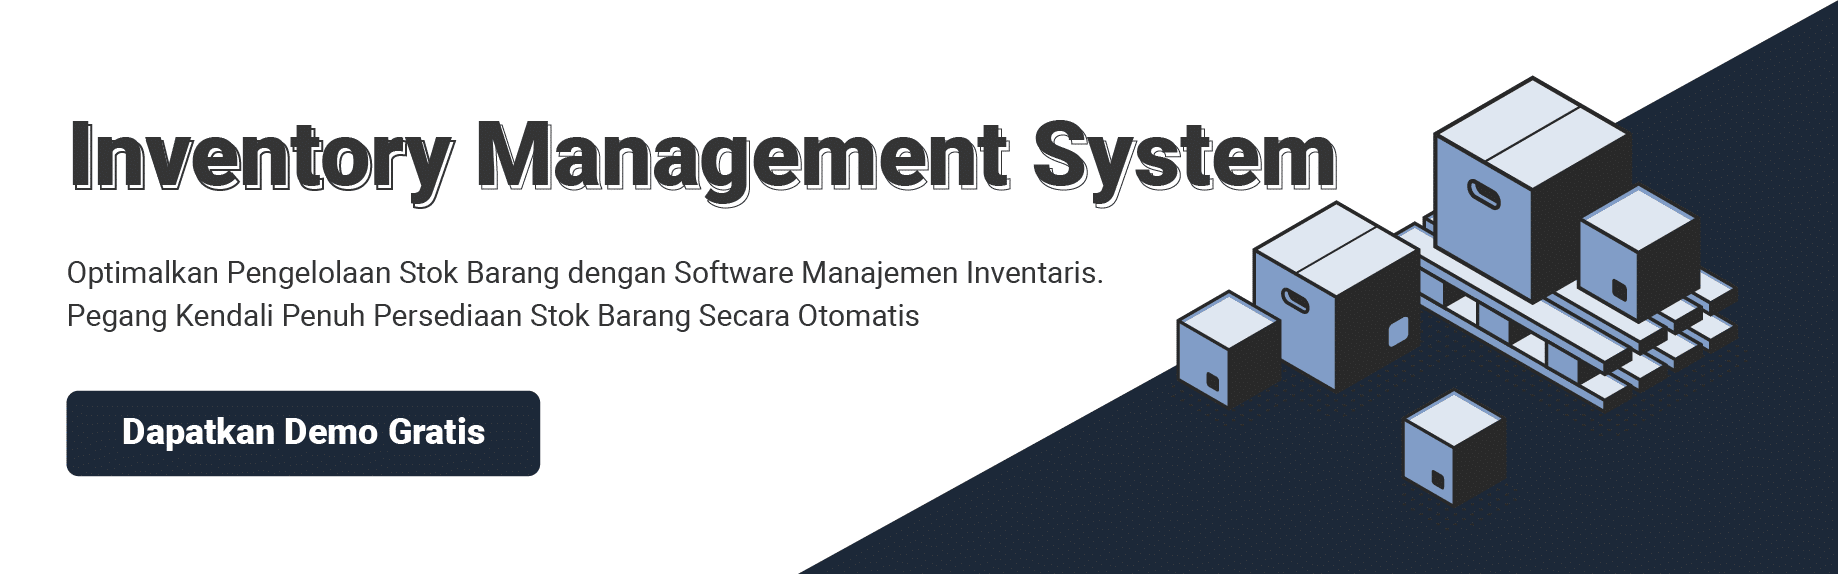 Sistem management inventory